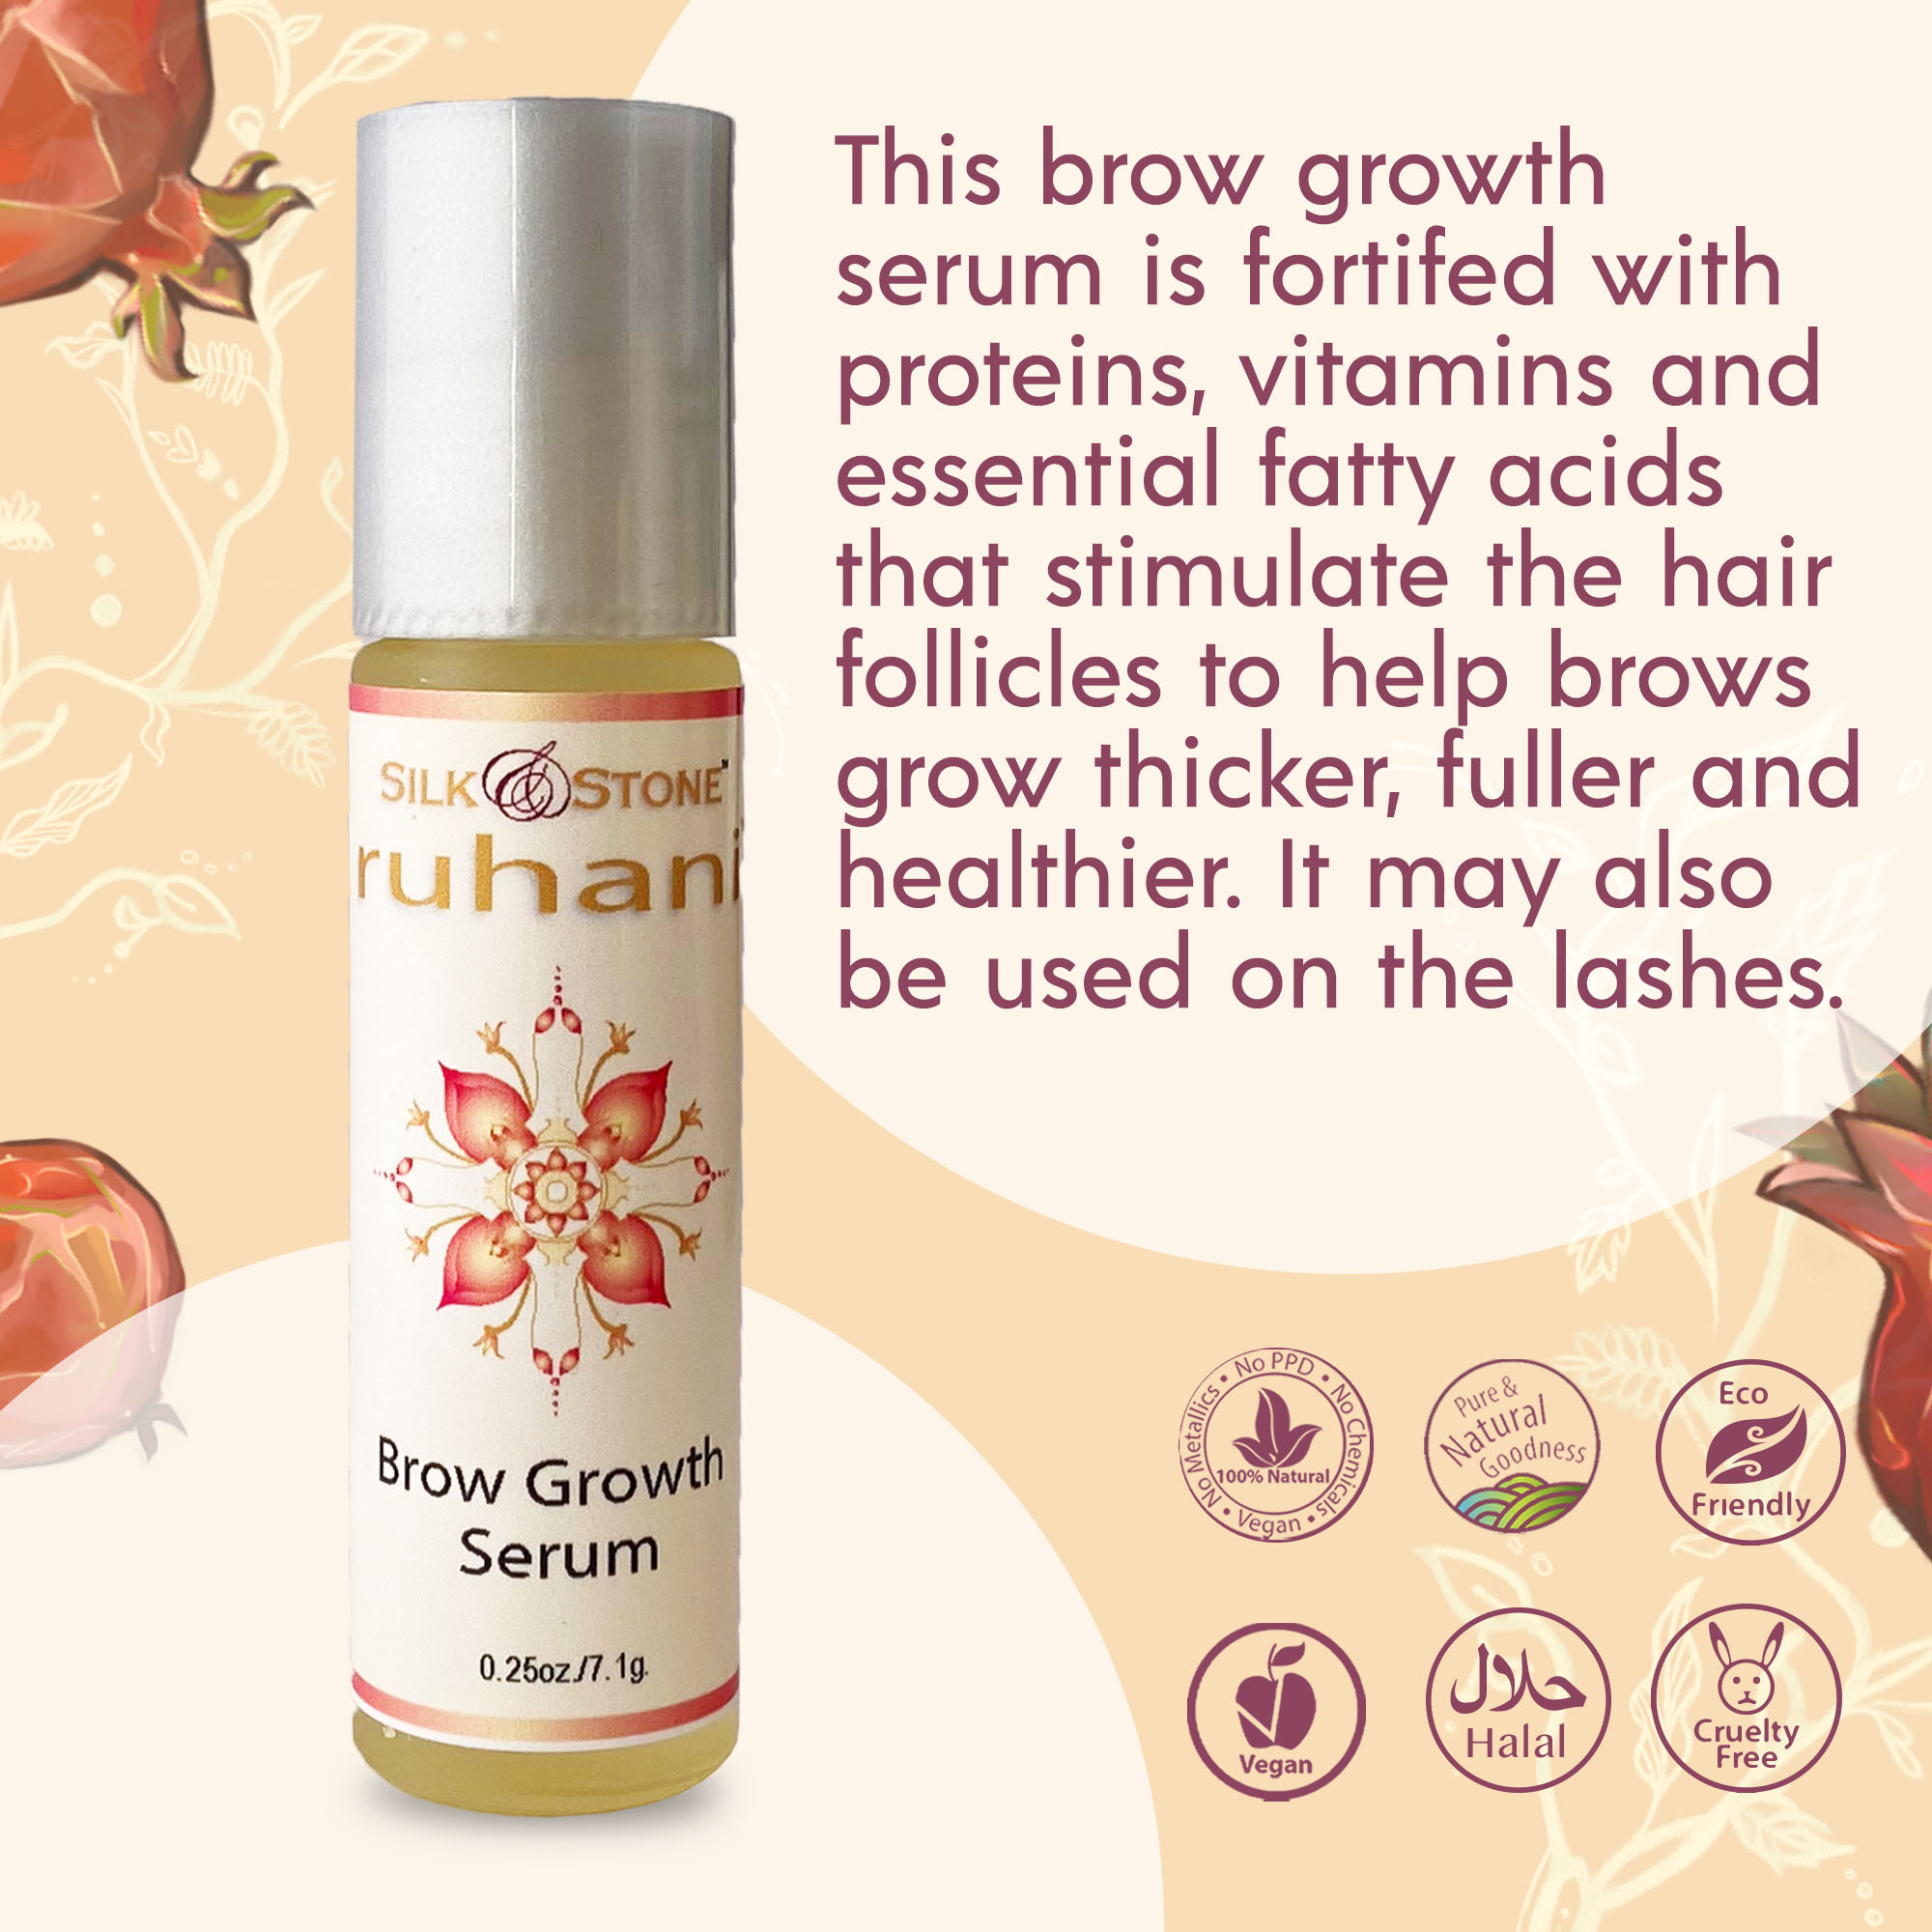 ss-ruhani-brow-growth-serum-image-2.jpg